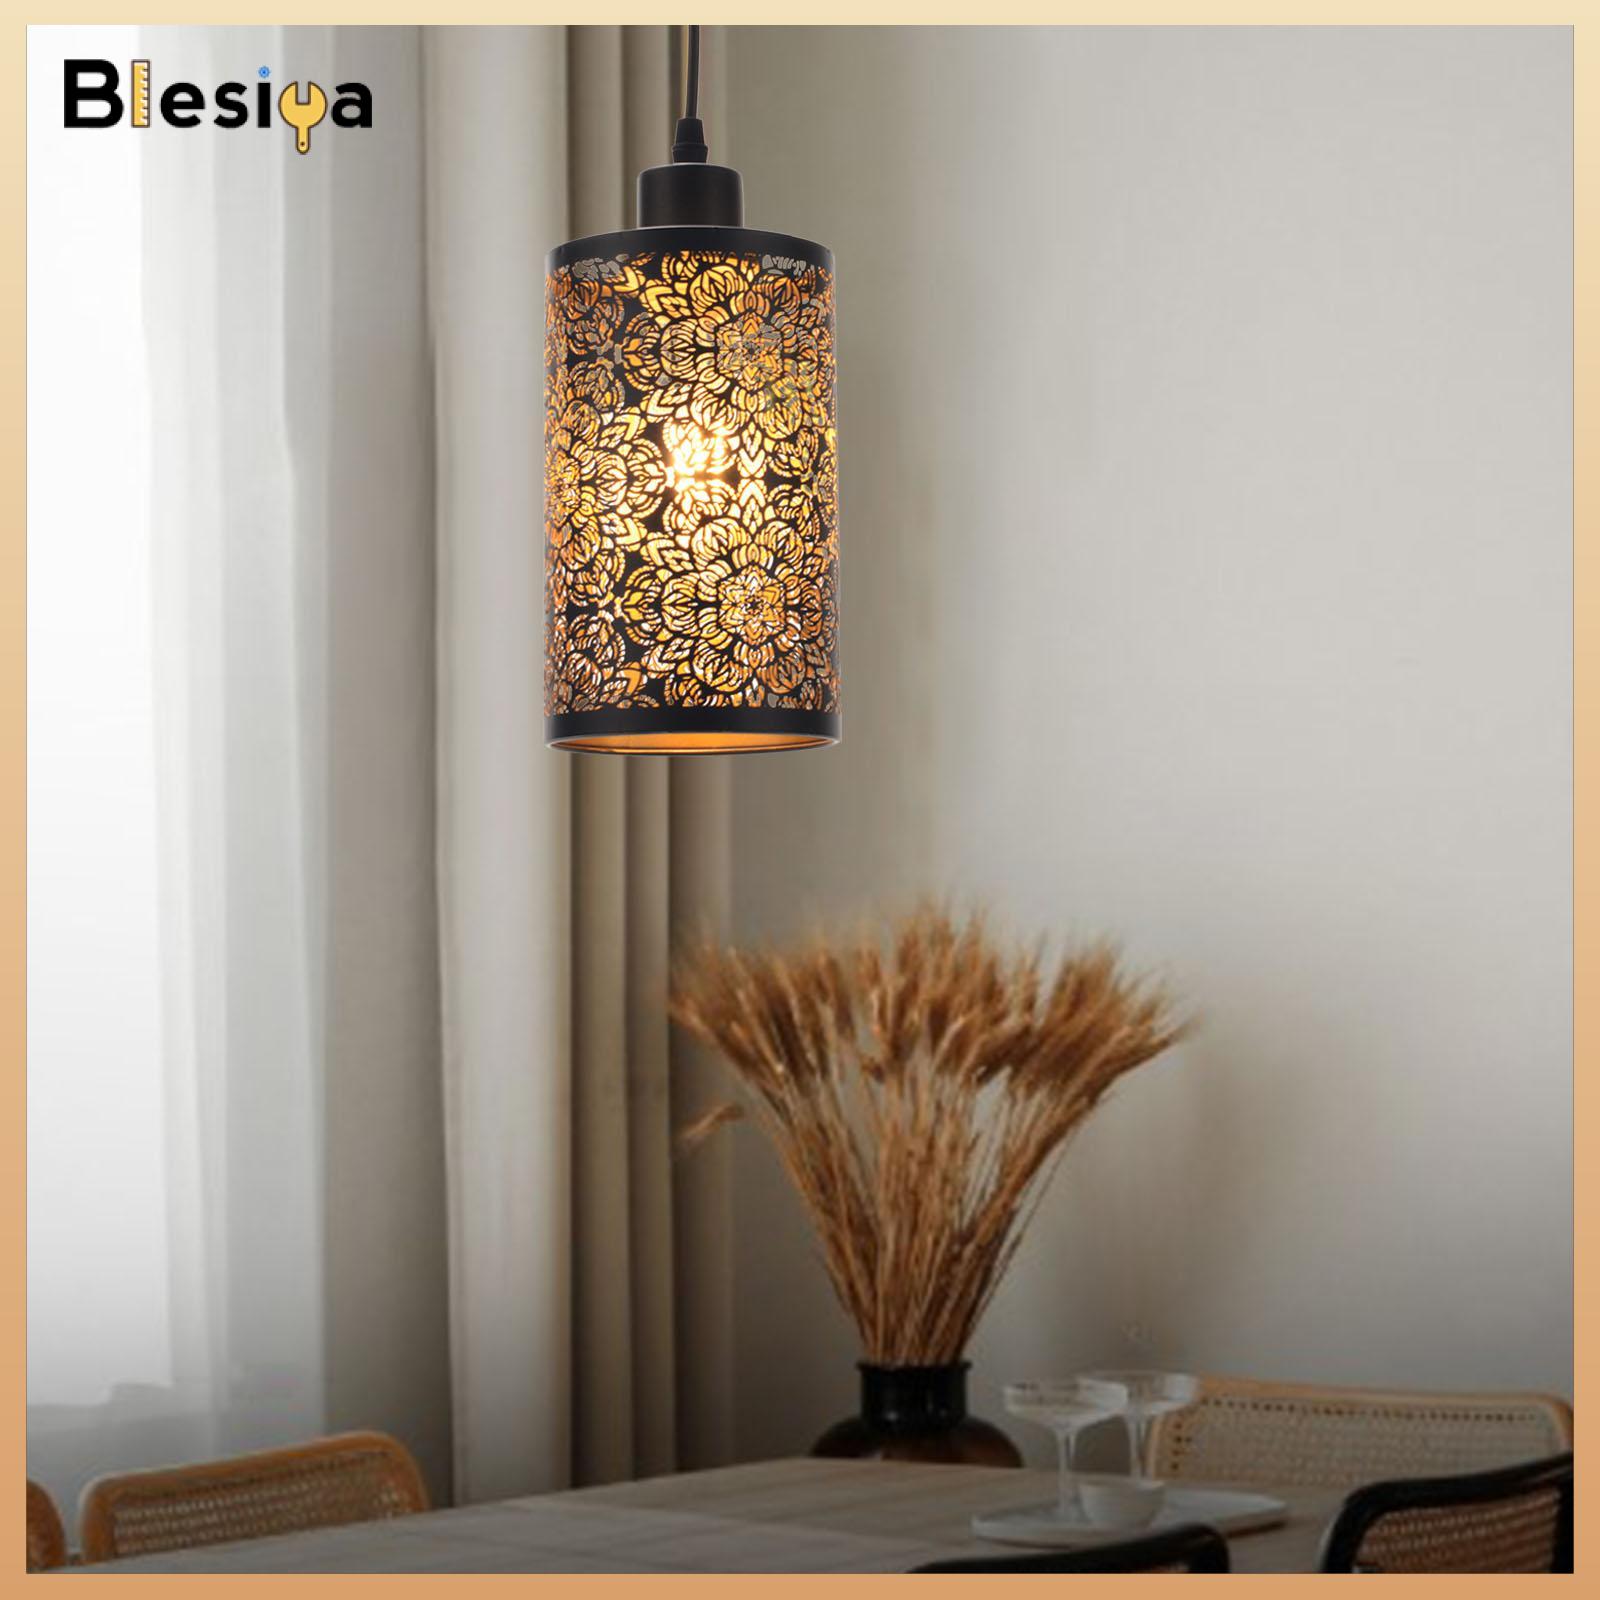 Blesiya Pendant Lamp Shade Hanging Light Fixture Cover Metal Lampshade for